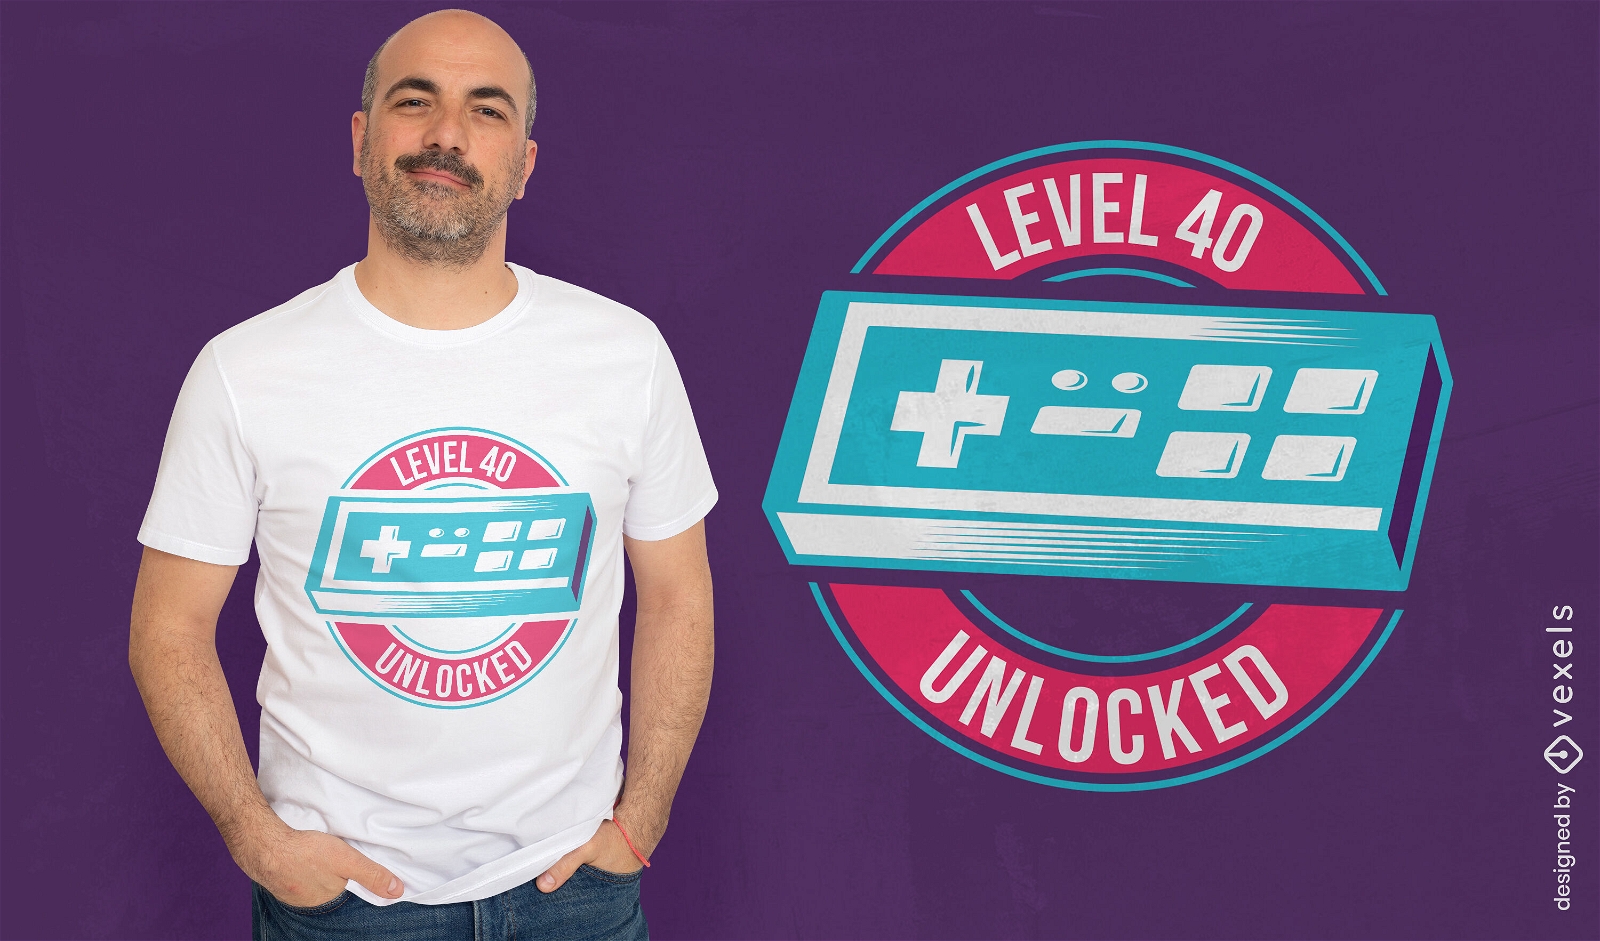 Level 40 unlocked t-shirt design